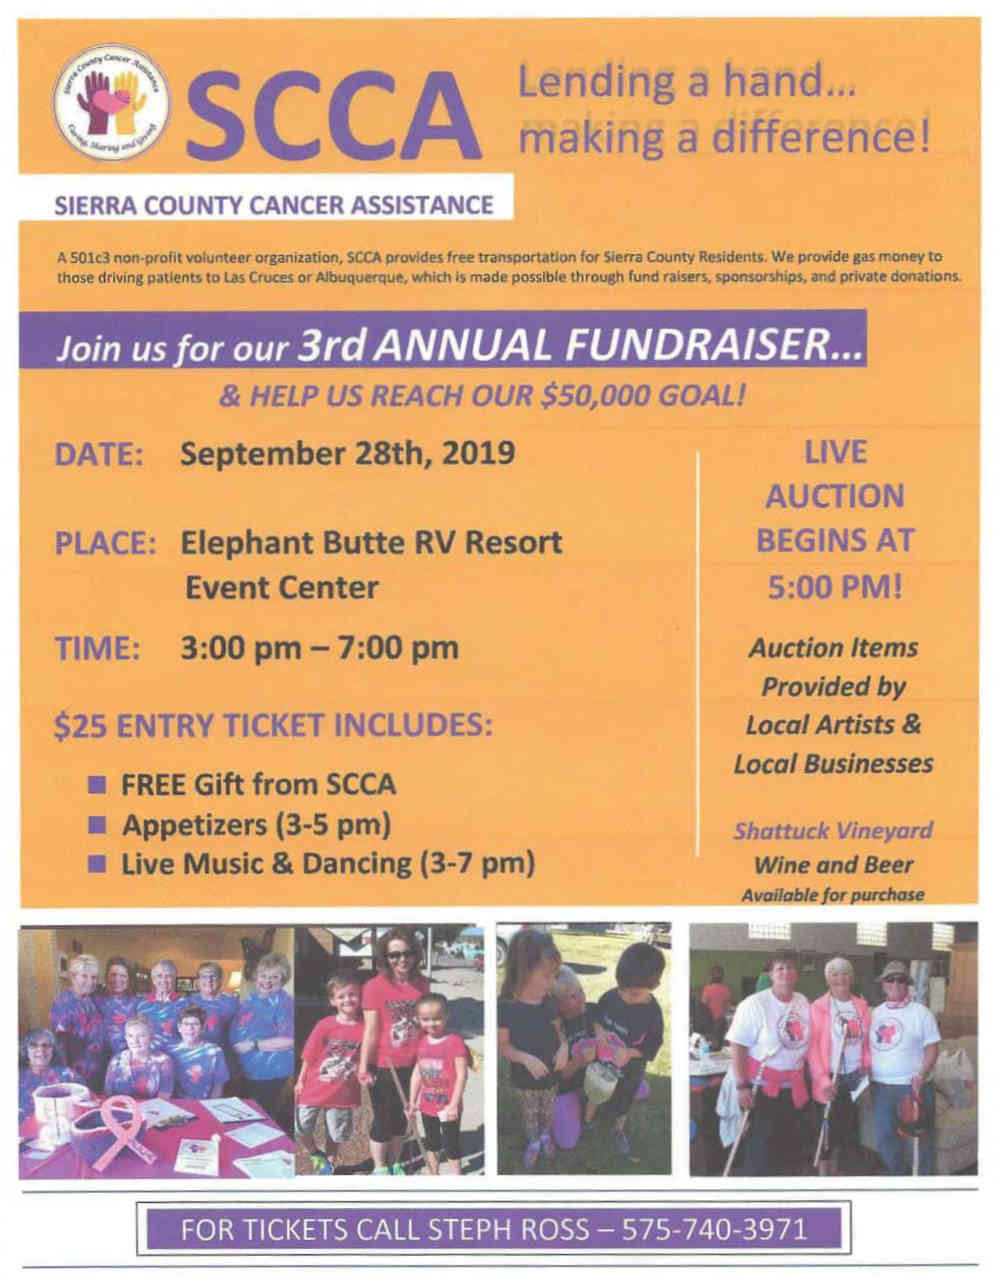 September 2019 fundraiser for Sierra County Cancer Assistance